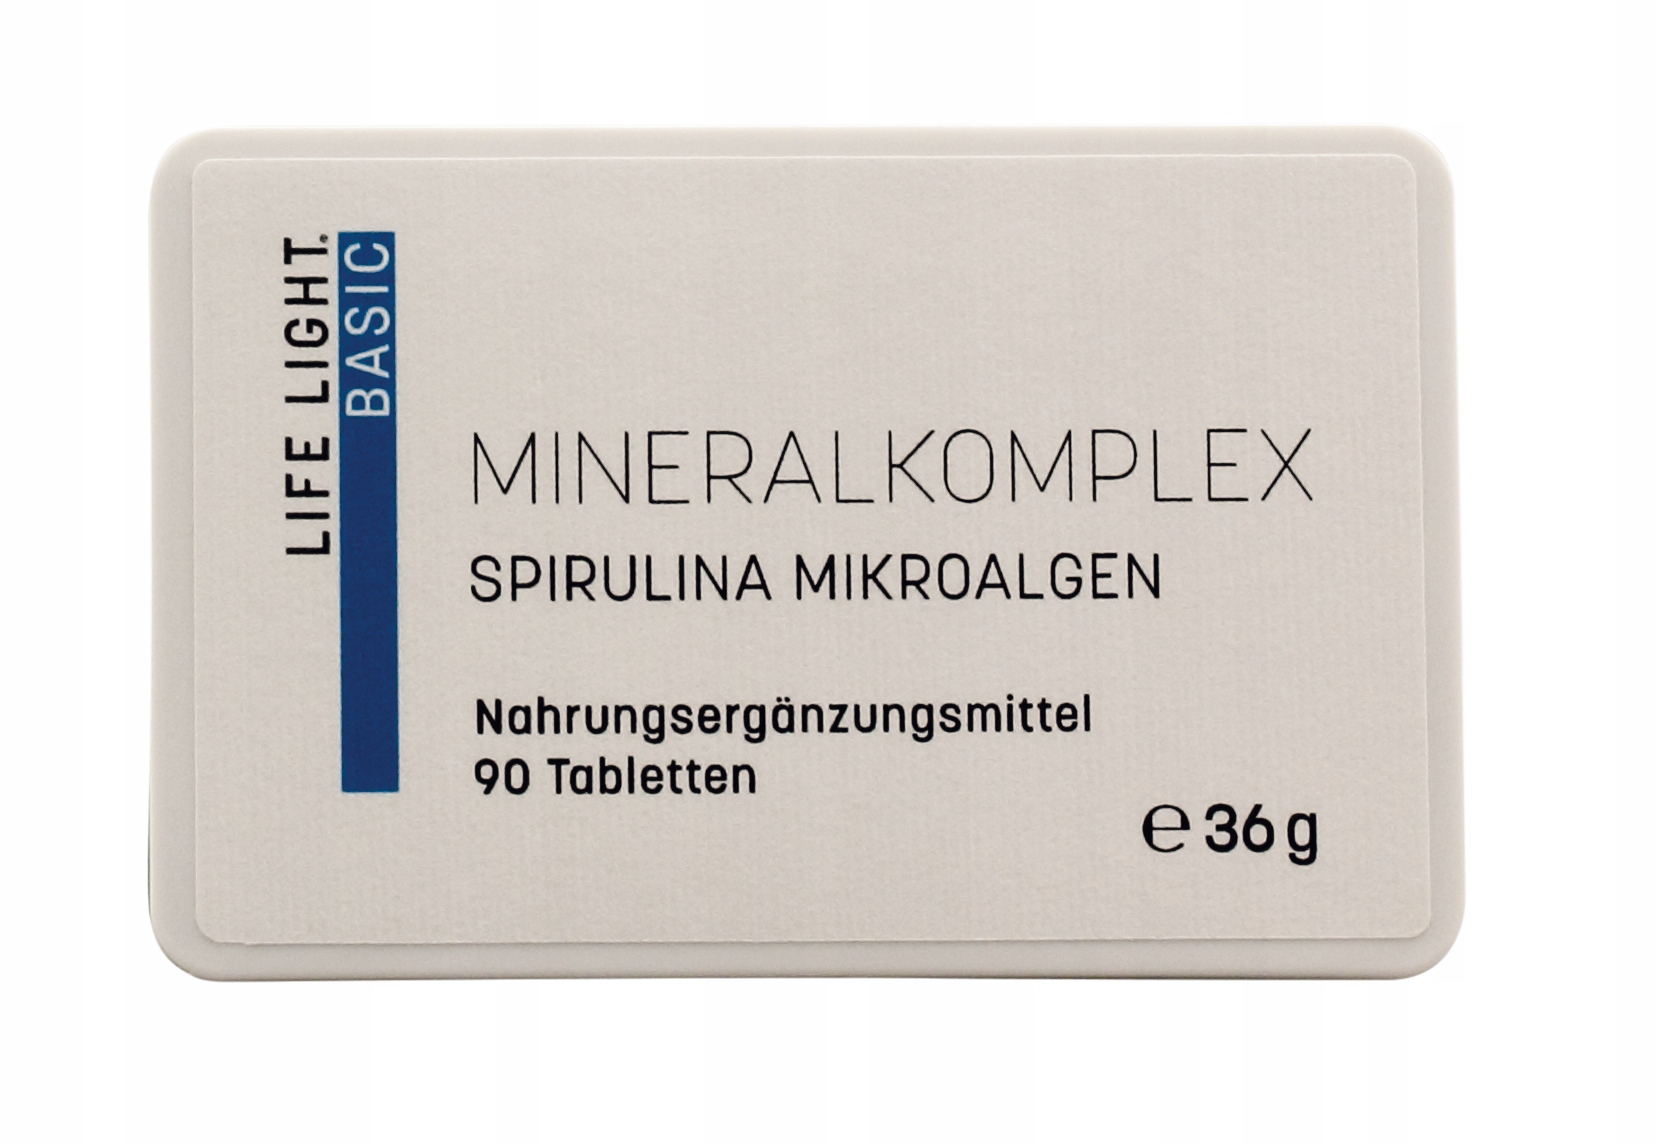 Spirulina Mineralkompled Live Light Minerals